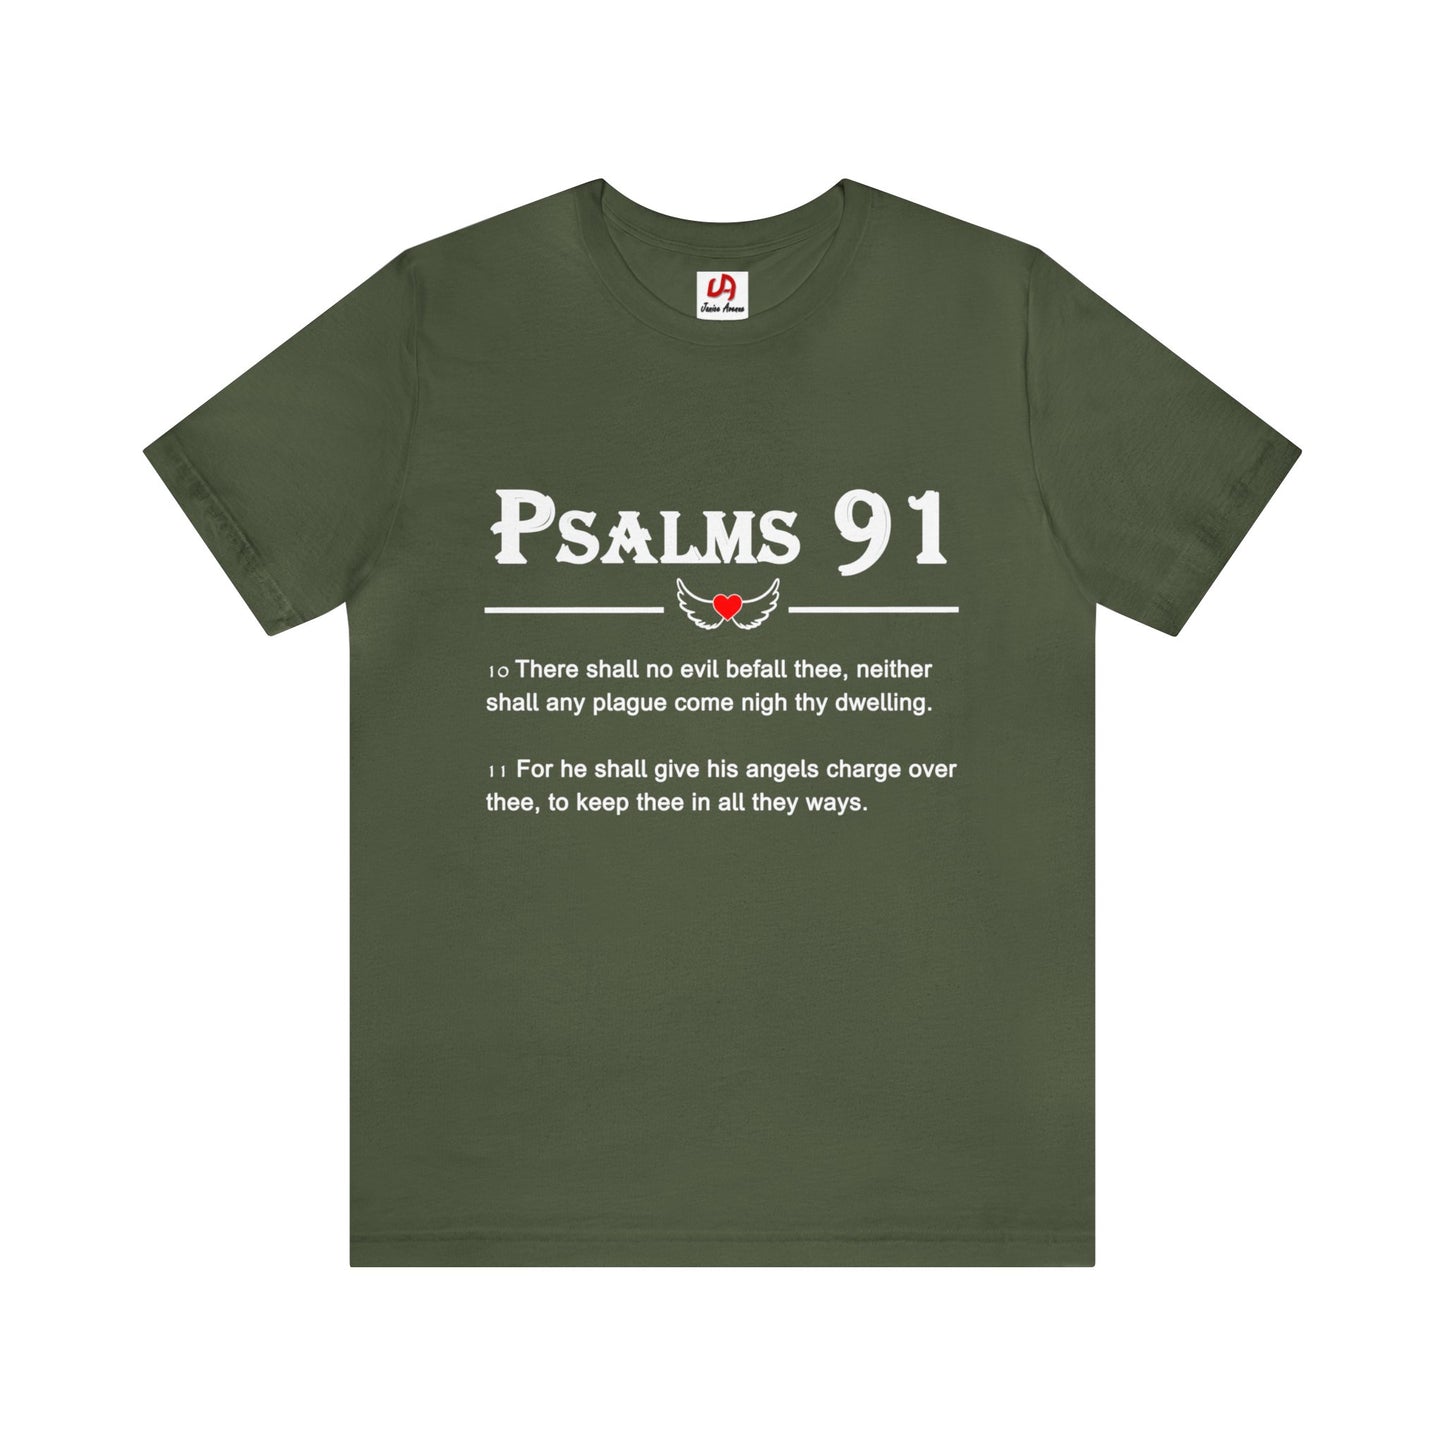 Psalms 91 Shirt - White Text